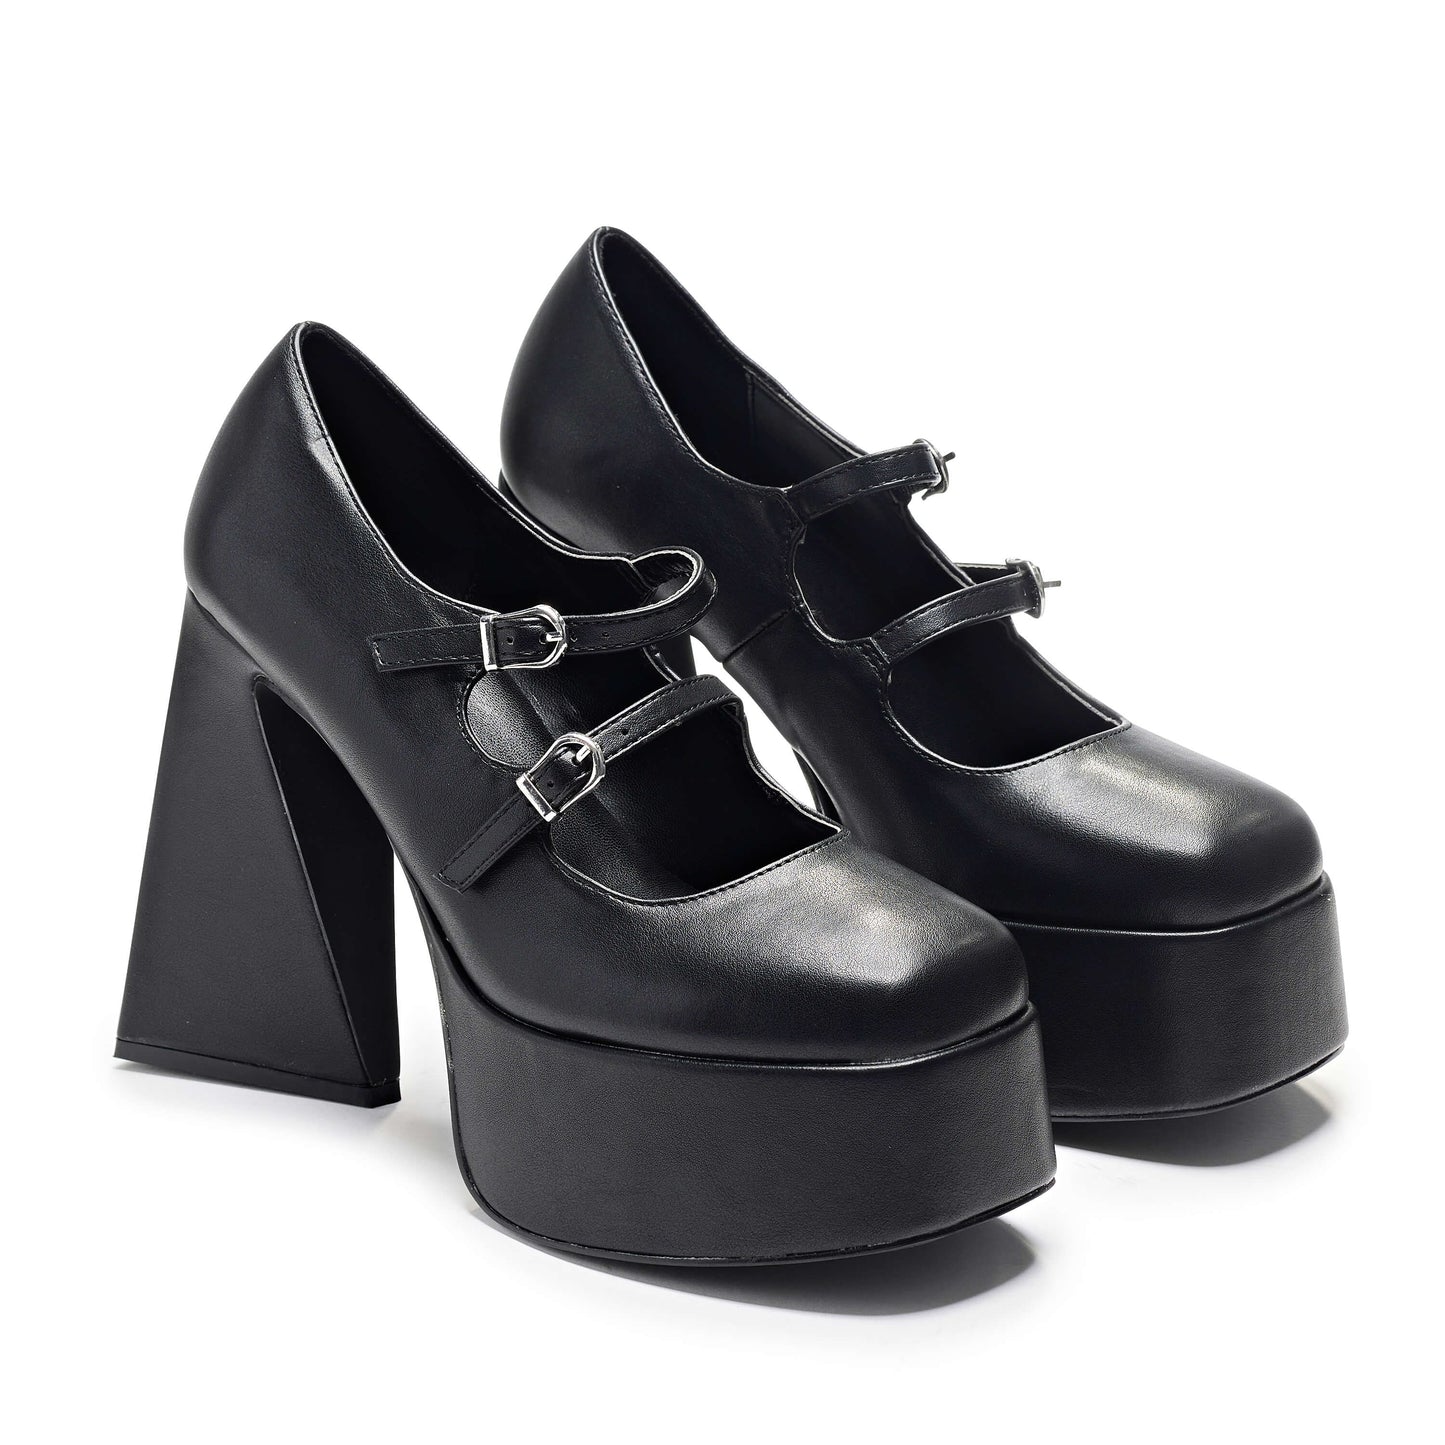 Zeba Black Platform Heels - Shoes - KOI Footwear - Black - Three-Quarter View